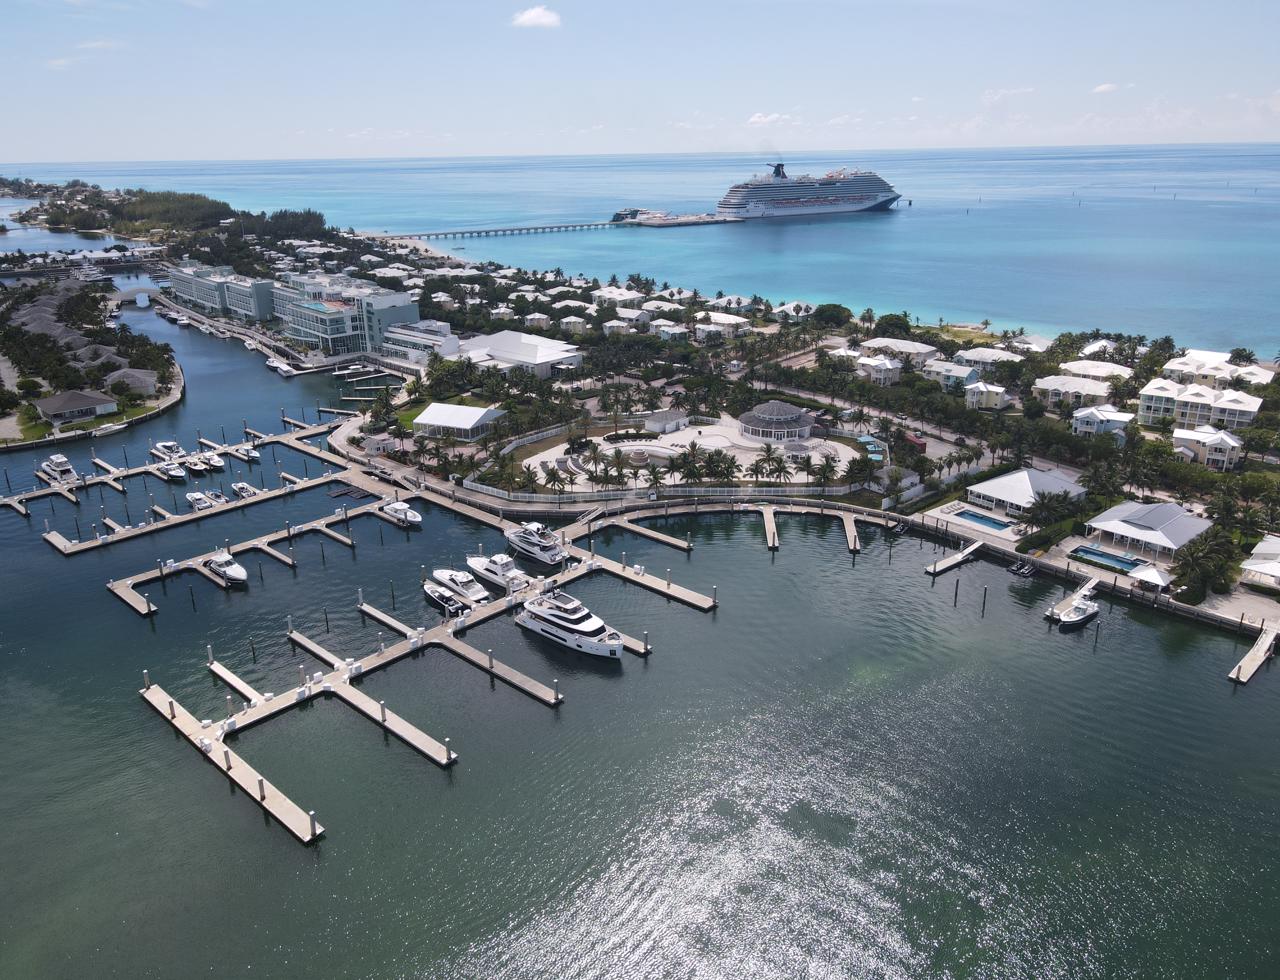 bimini bahamas Dock slip for sale